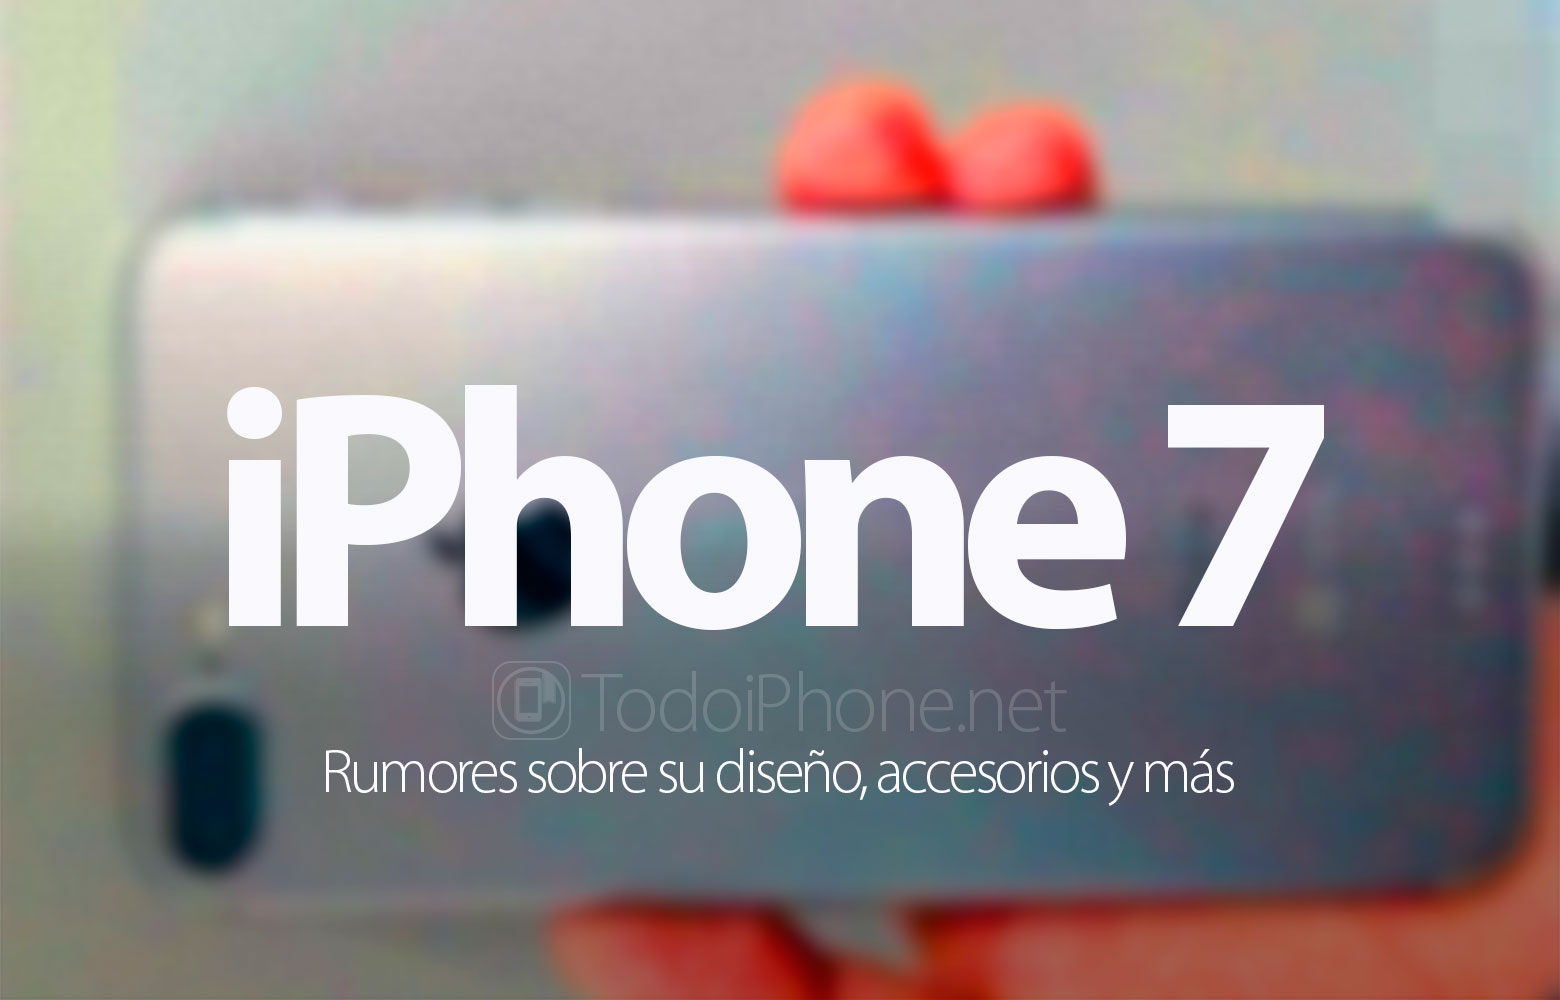 iphone-7-rumores-diseno-accesorios-mas